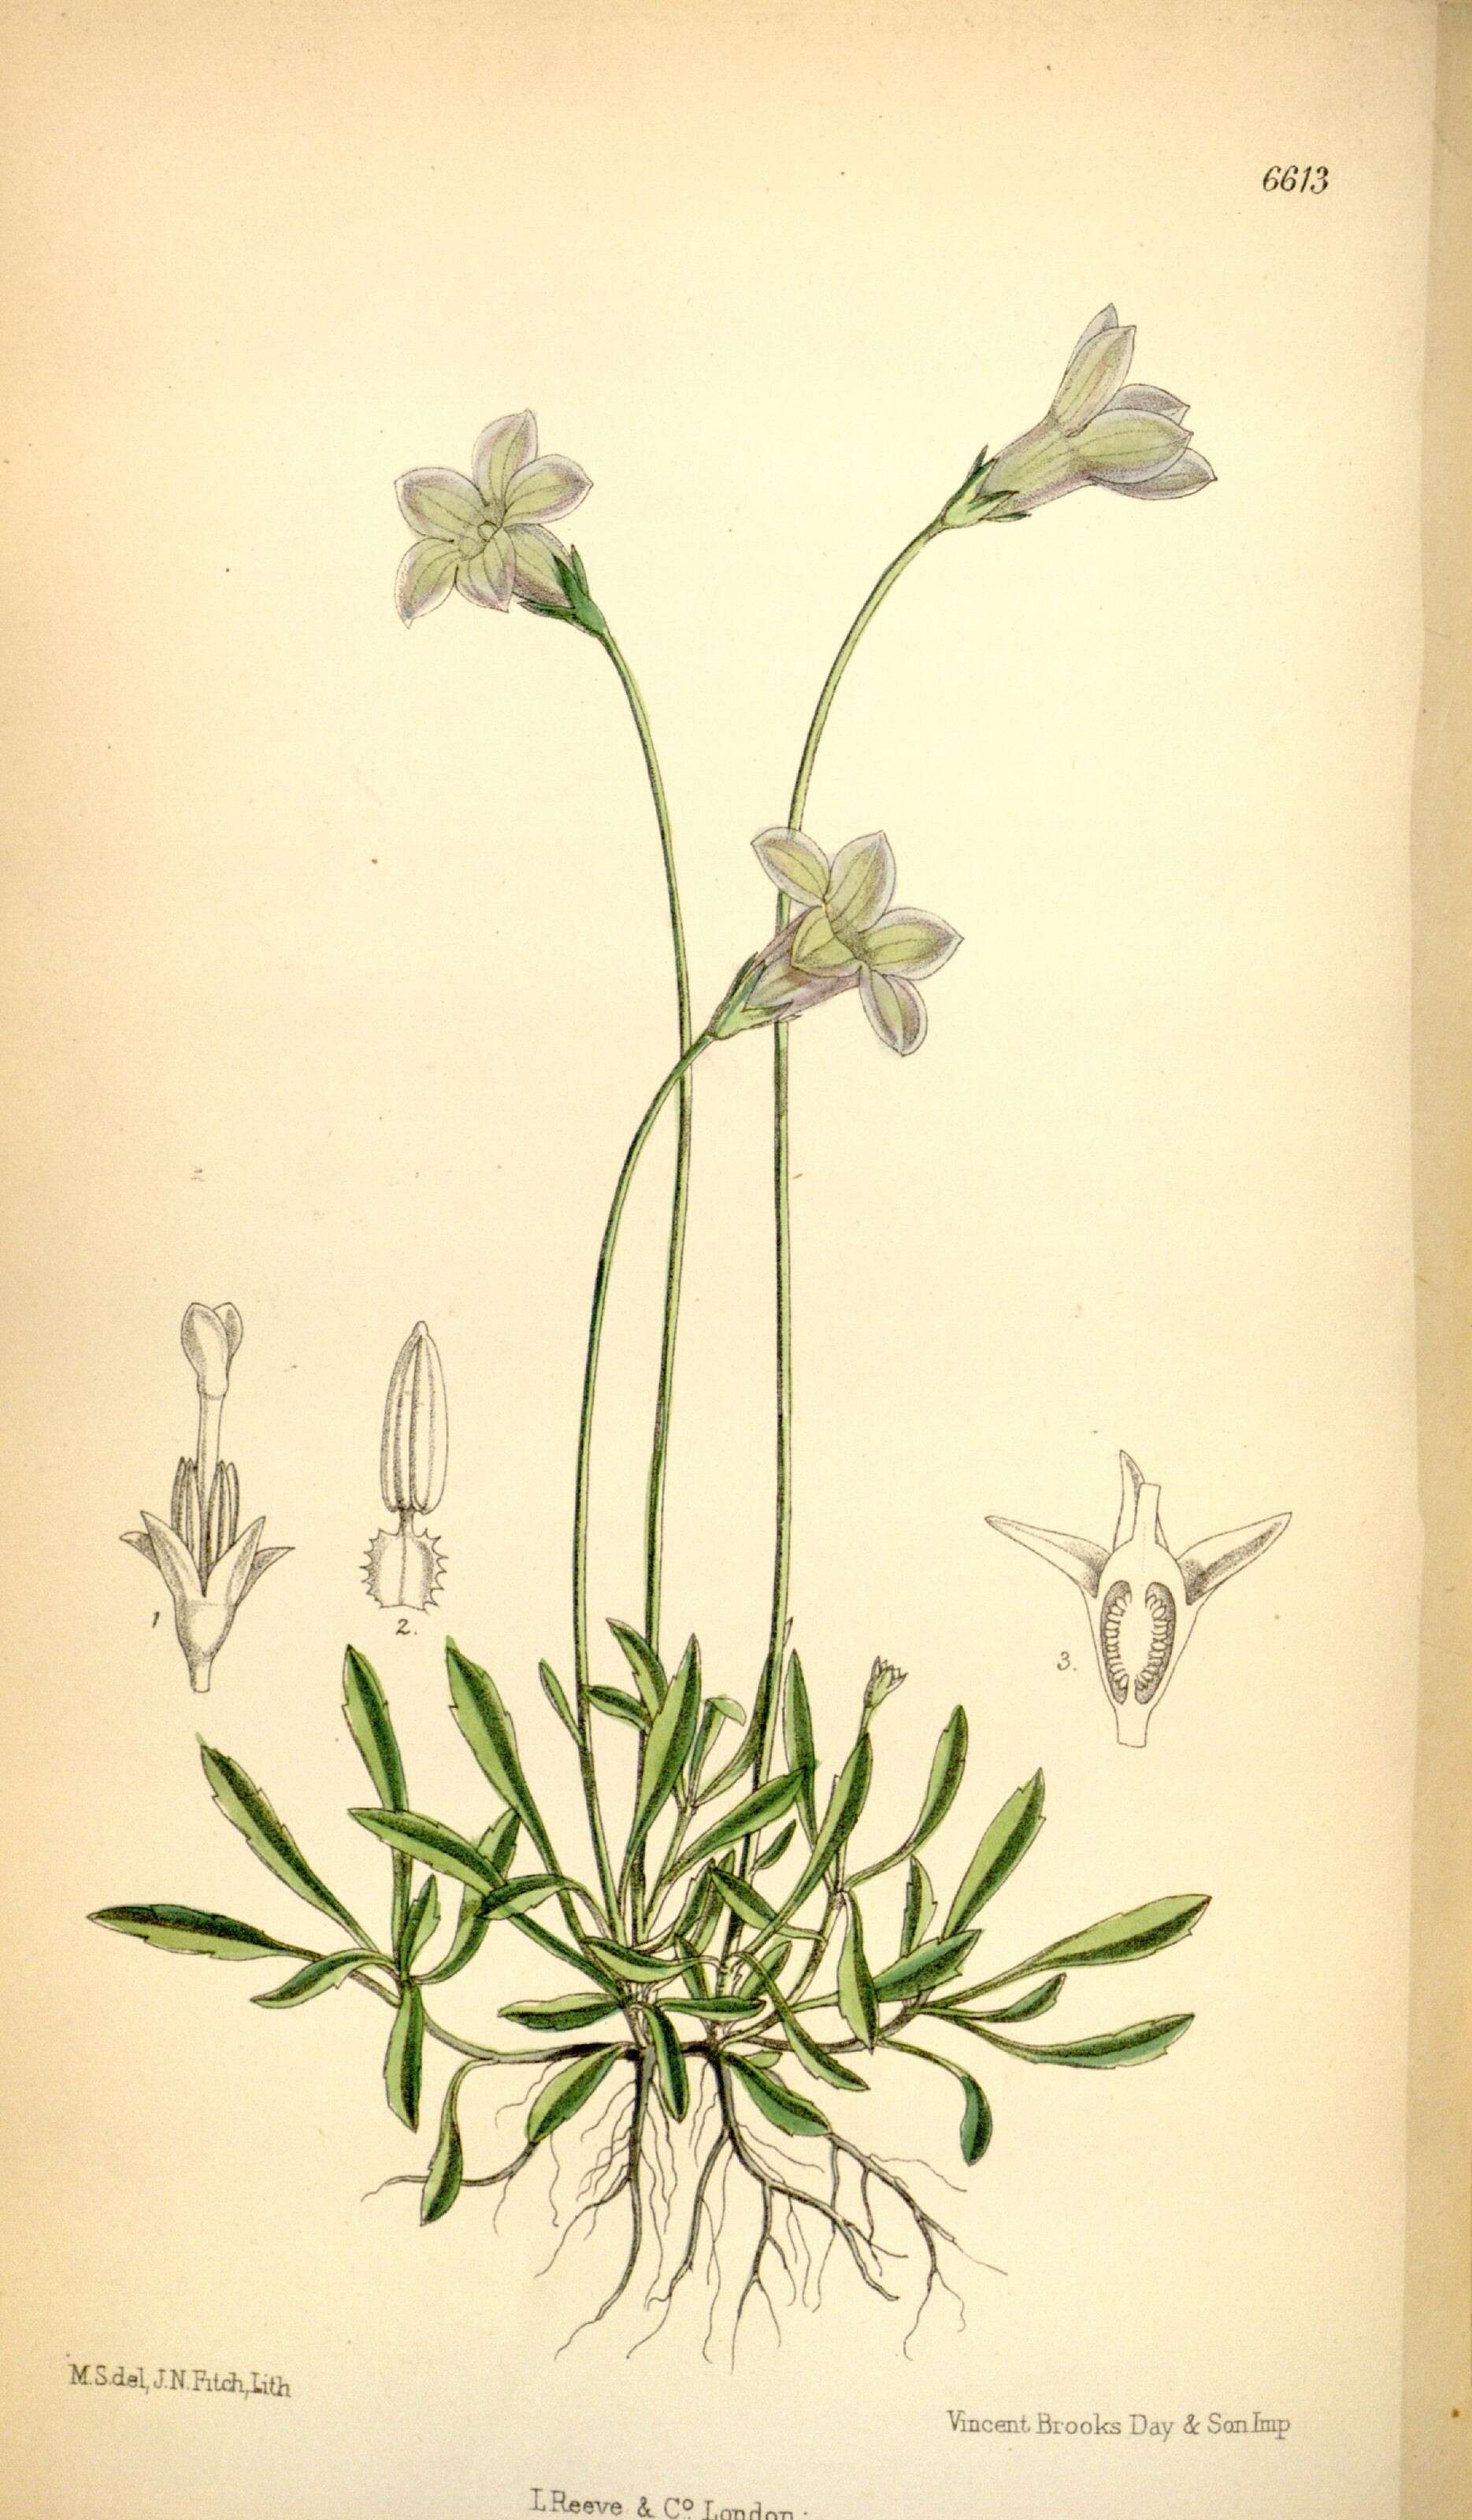 Image de Wahlenbergia saxicola (R. Br.) A. DC.